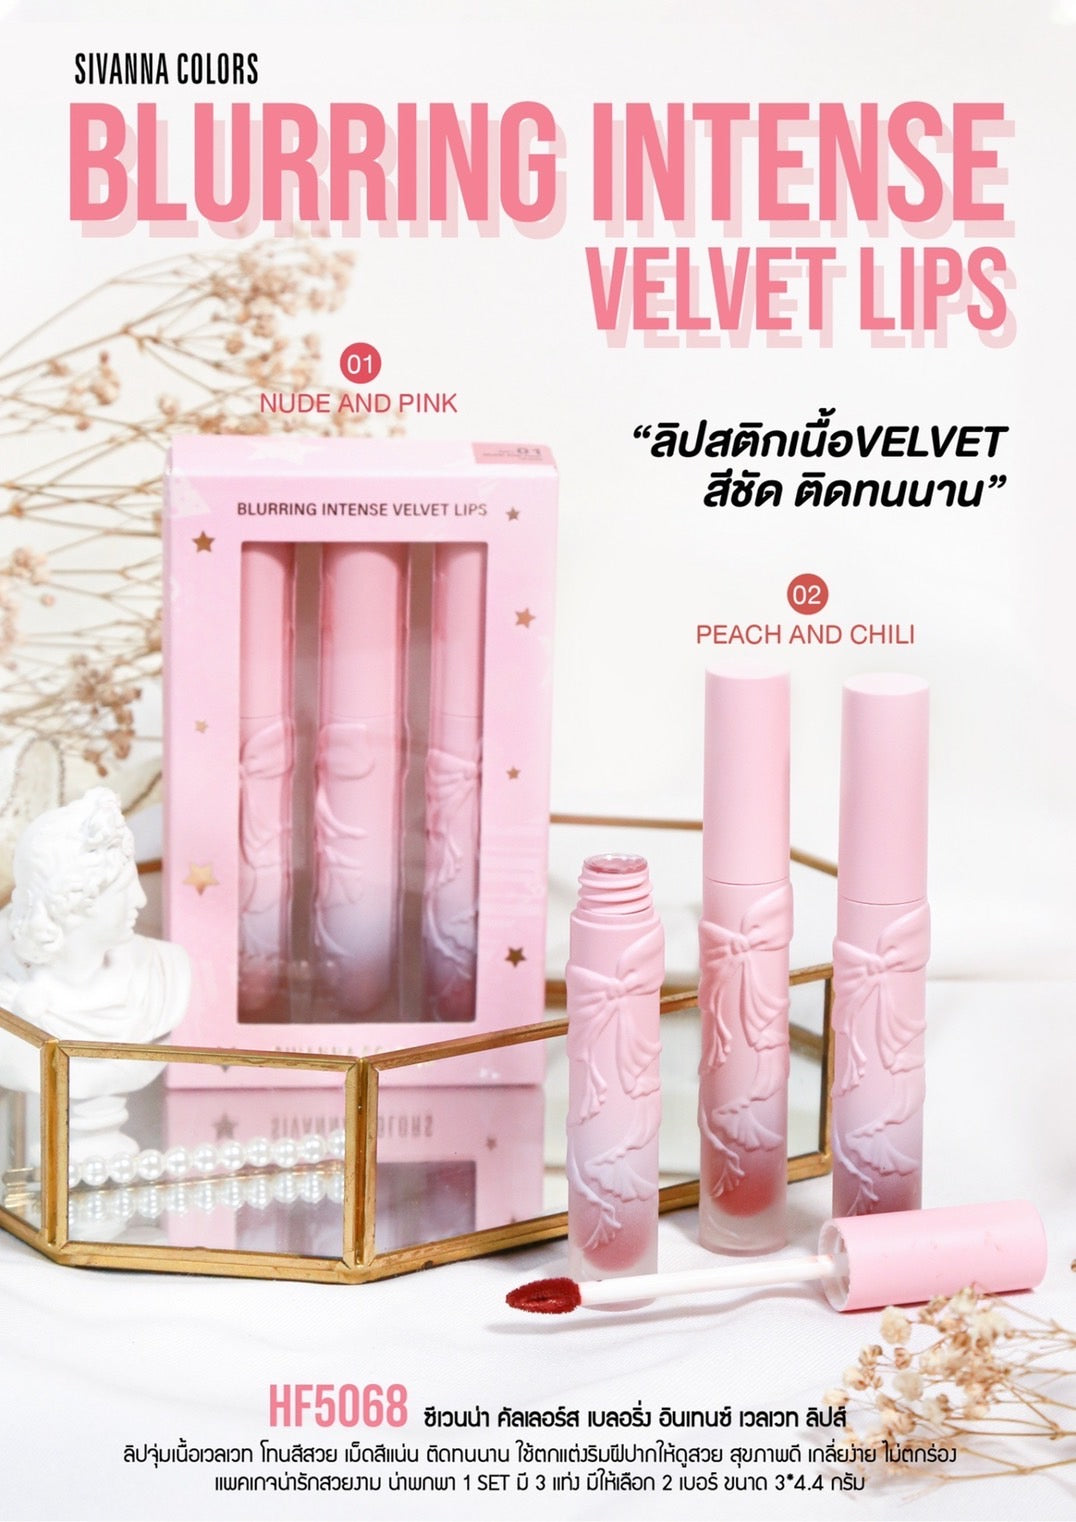 Sivanna Blurring Intense Velvet Lips #HF5068 : ซิวานน่า เบลอริ่ง เวลเวท ลิป ลิปสติก